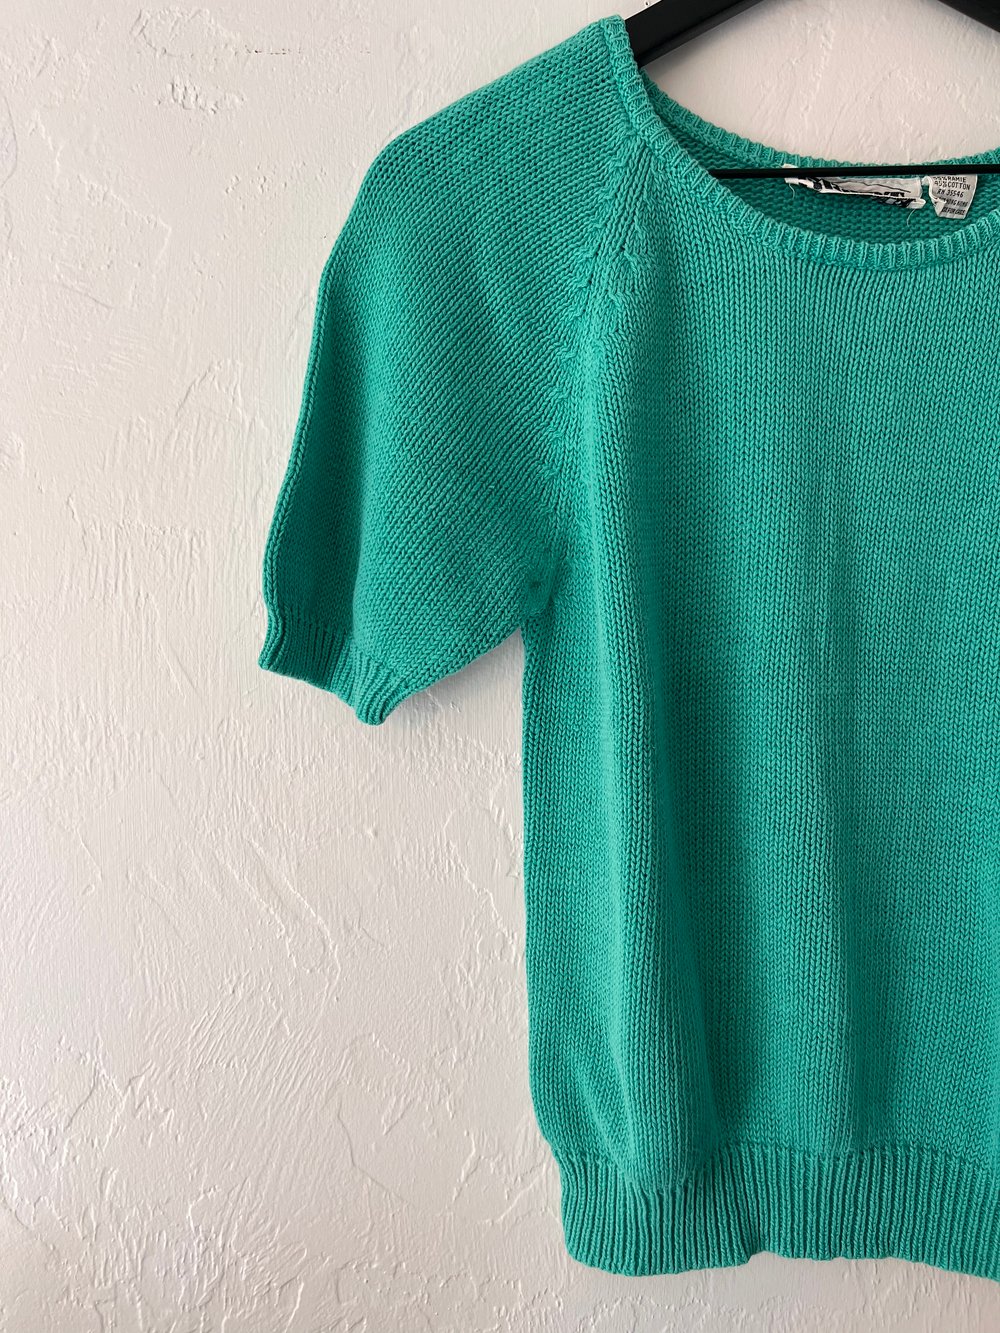 Vintage Import House Turquoise Sweater Shirt (M)